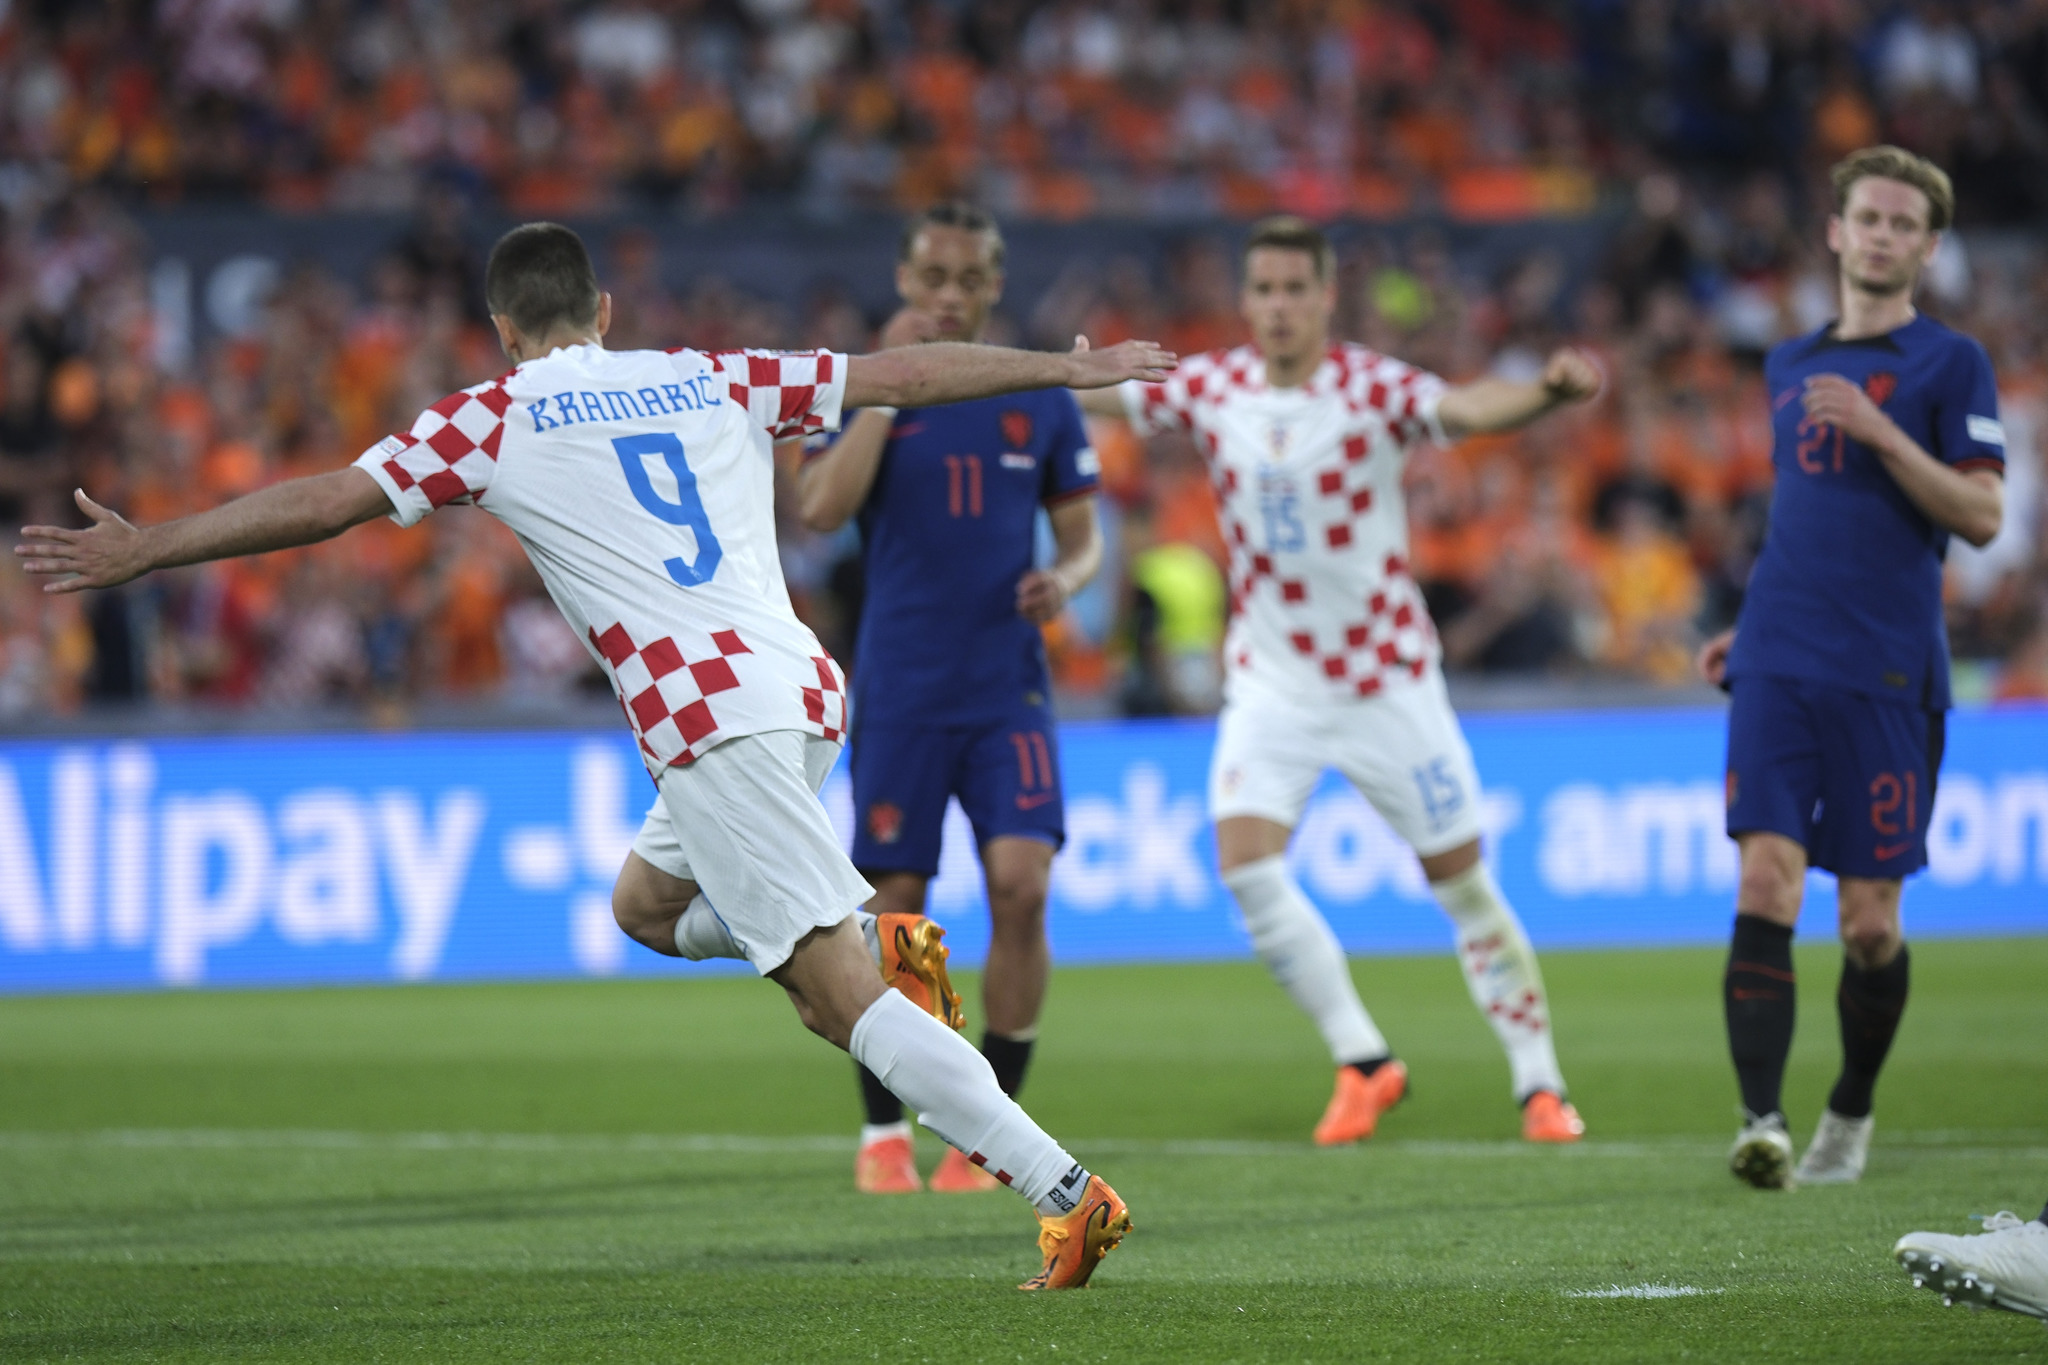 Netherlands 2-4 Croatia Goals and highlights